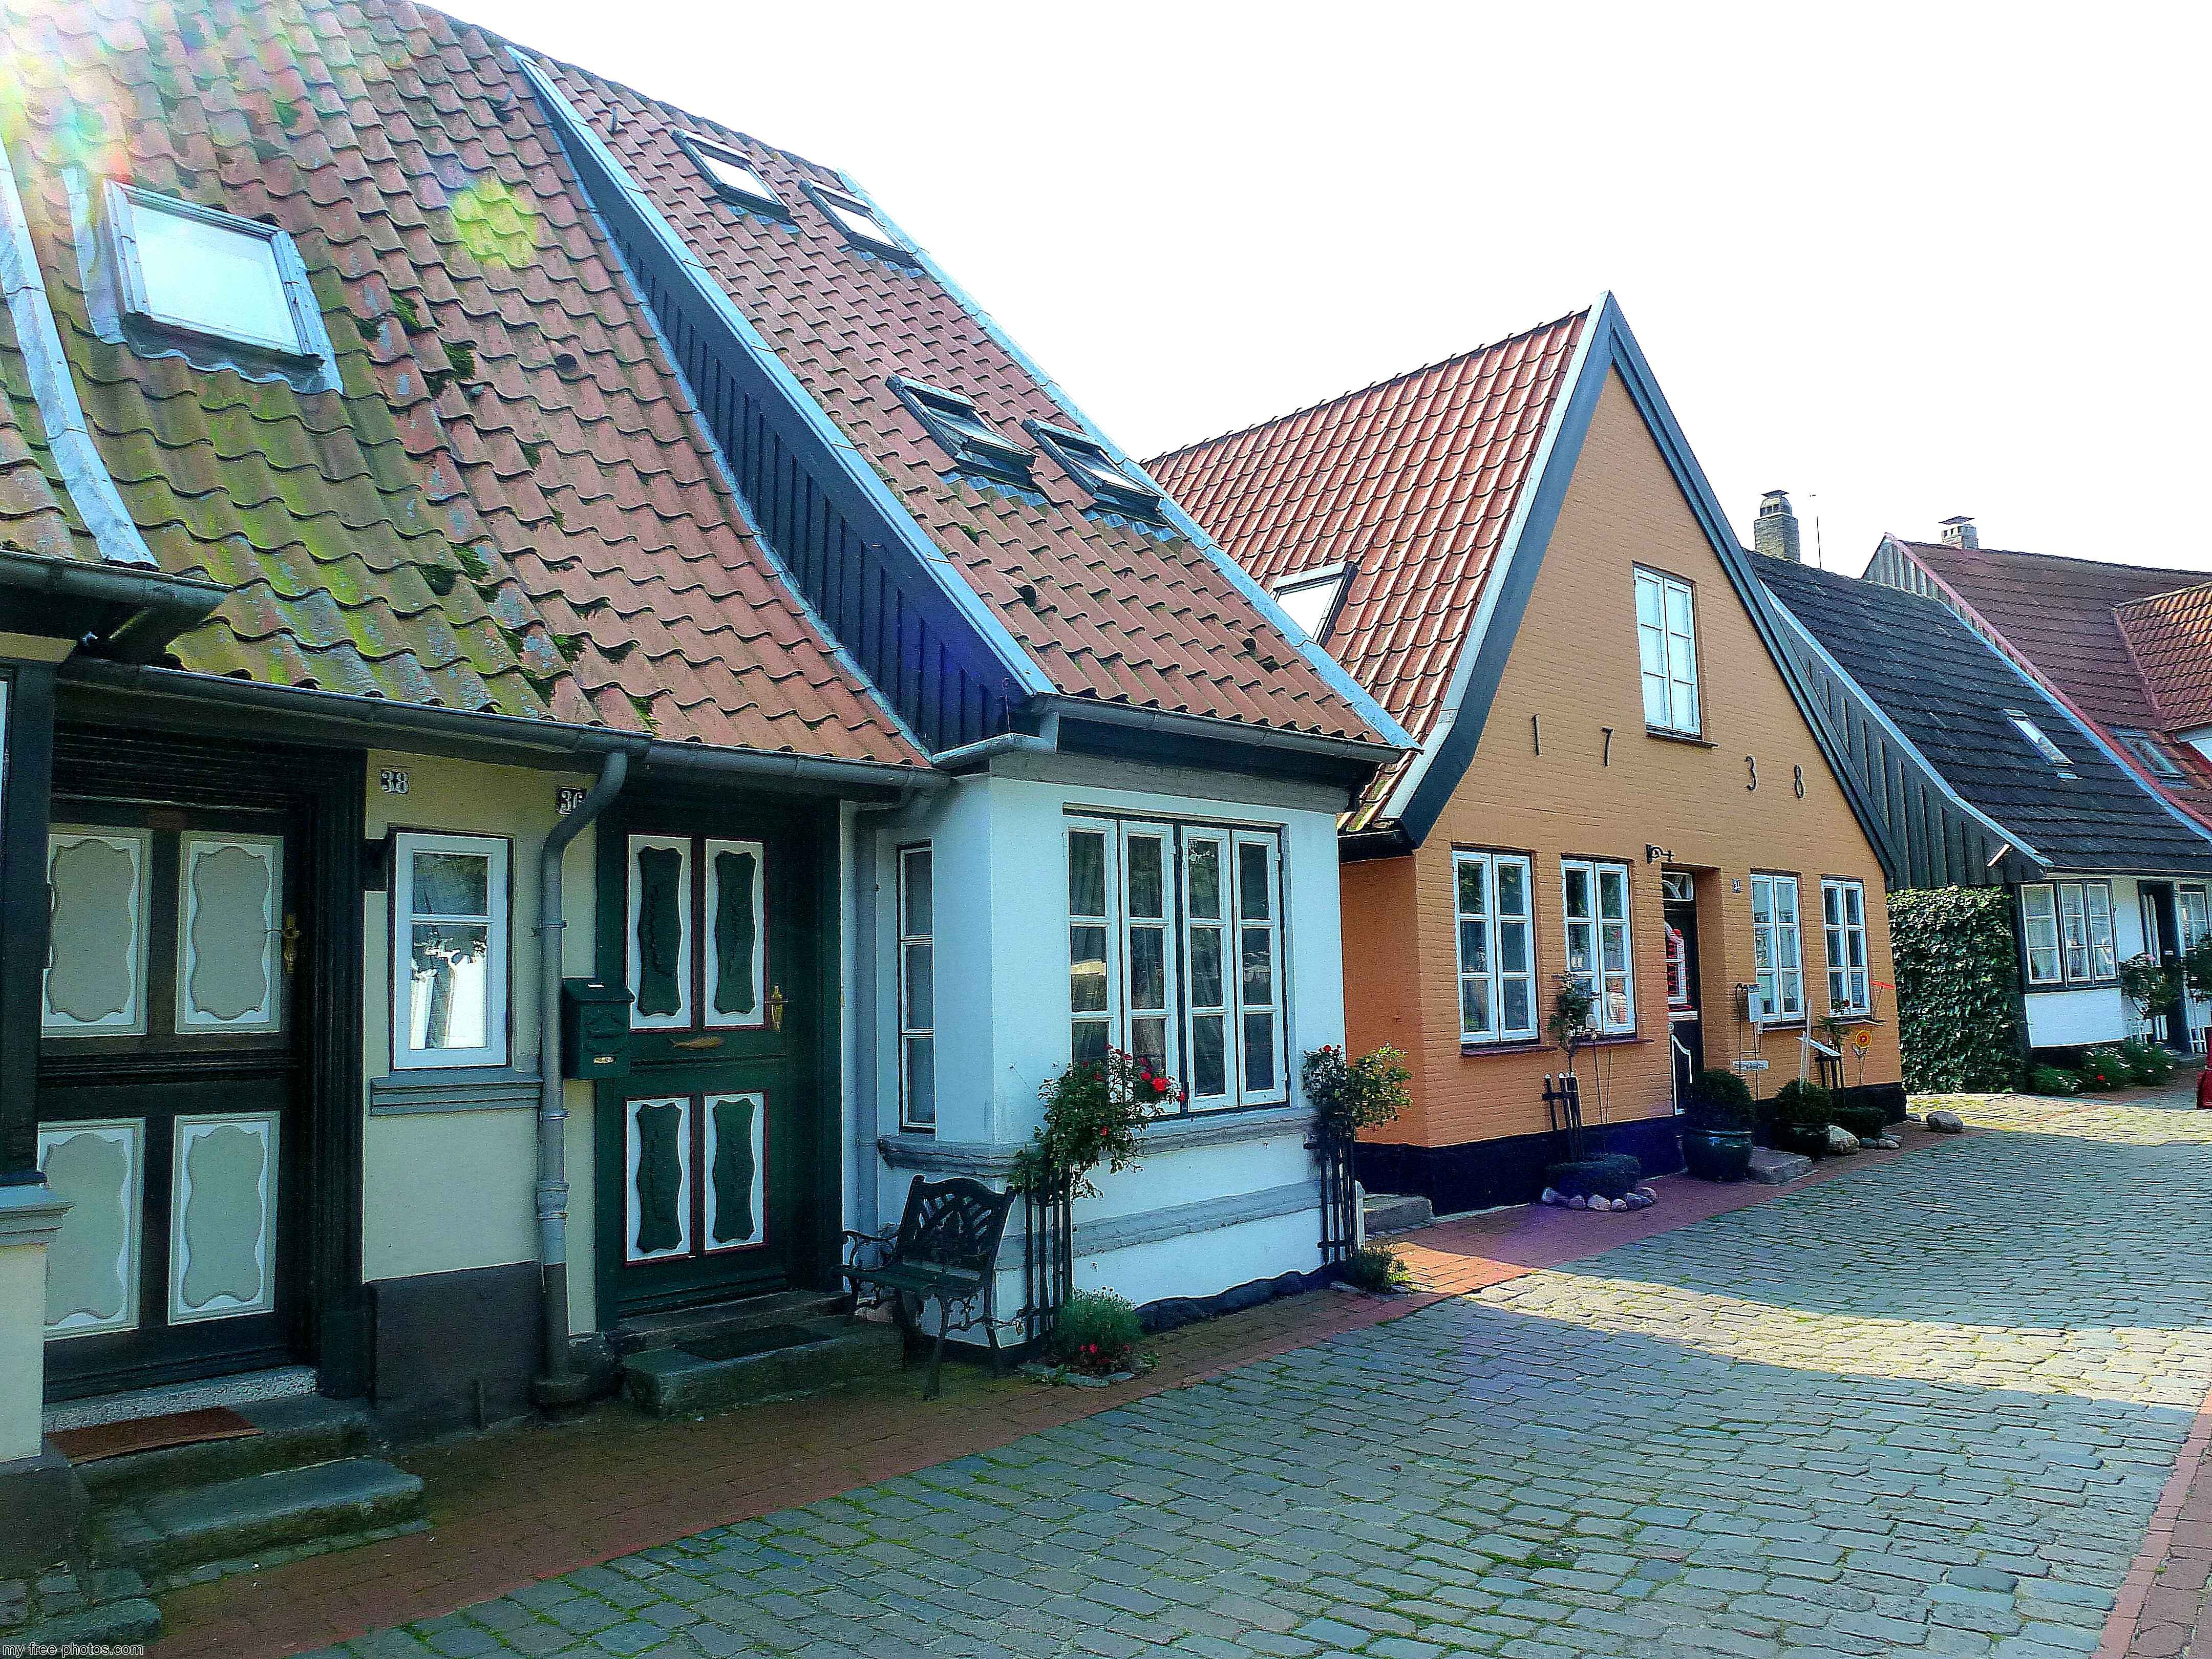 Schleswig,germany